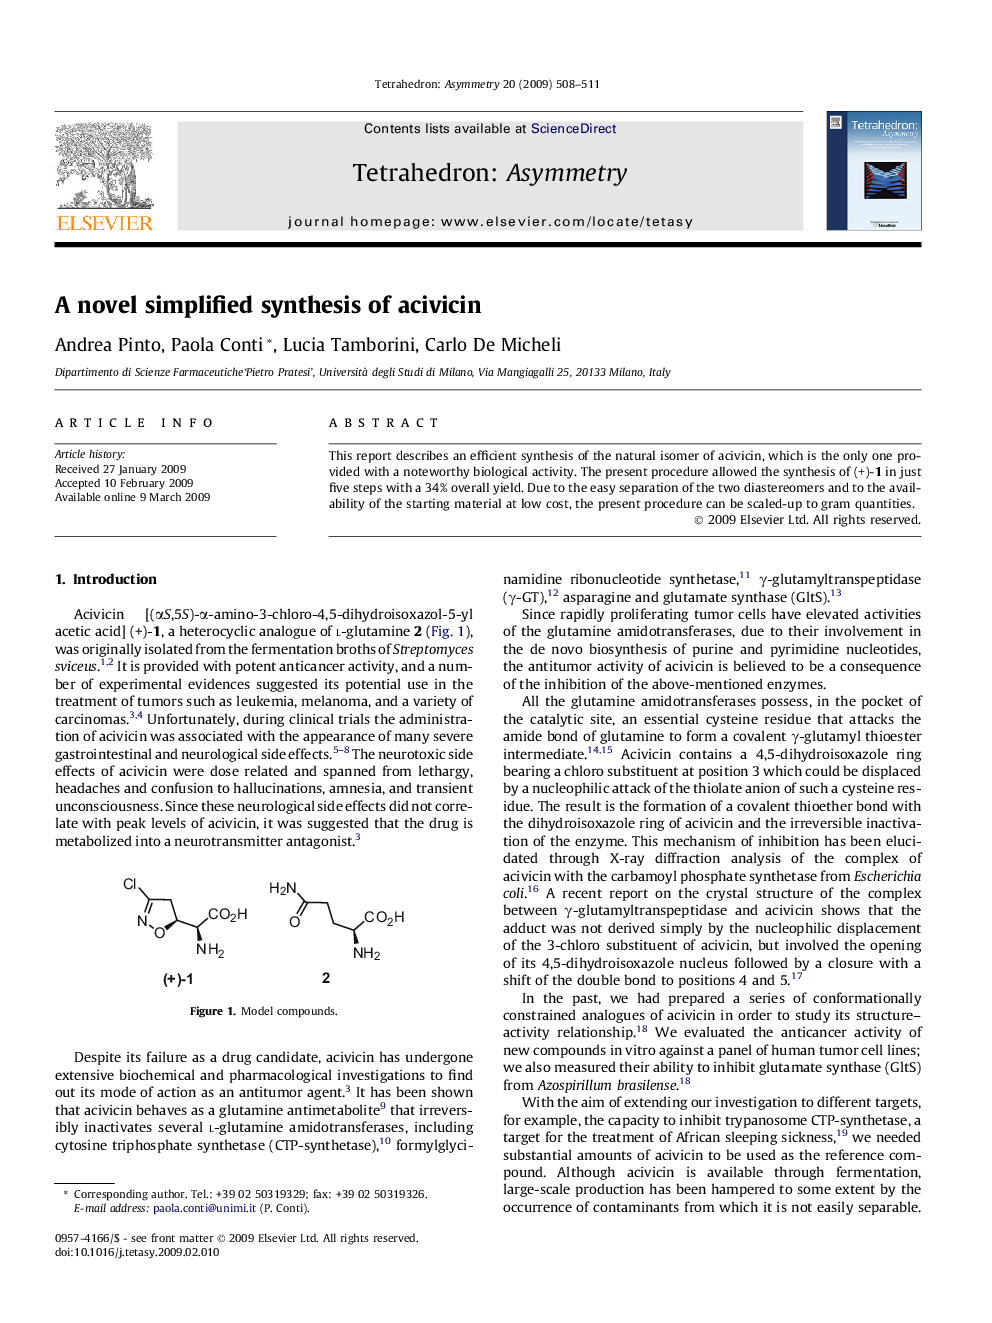 A novel simplified synthesis of acivicin